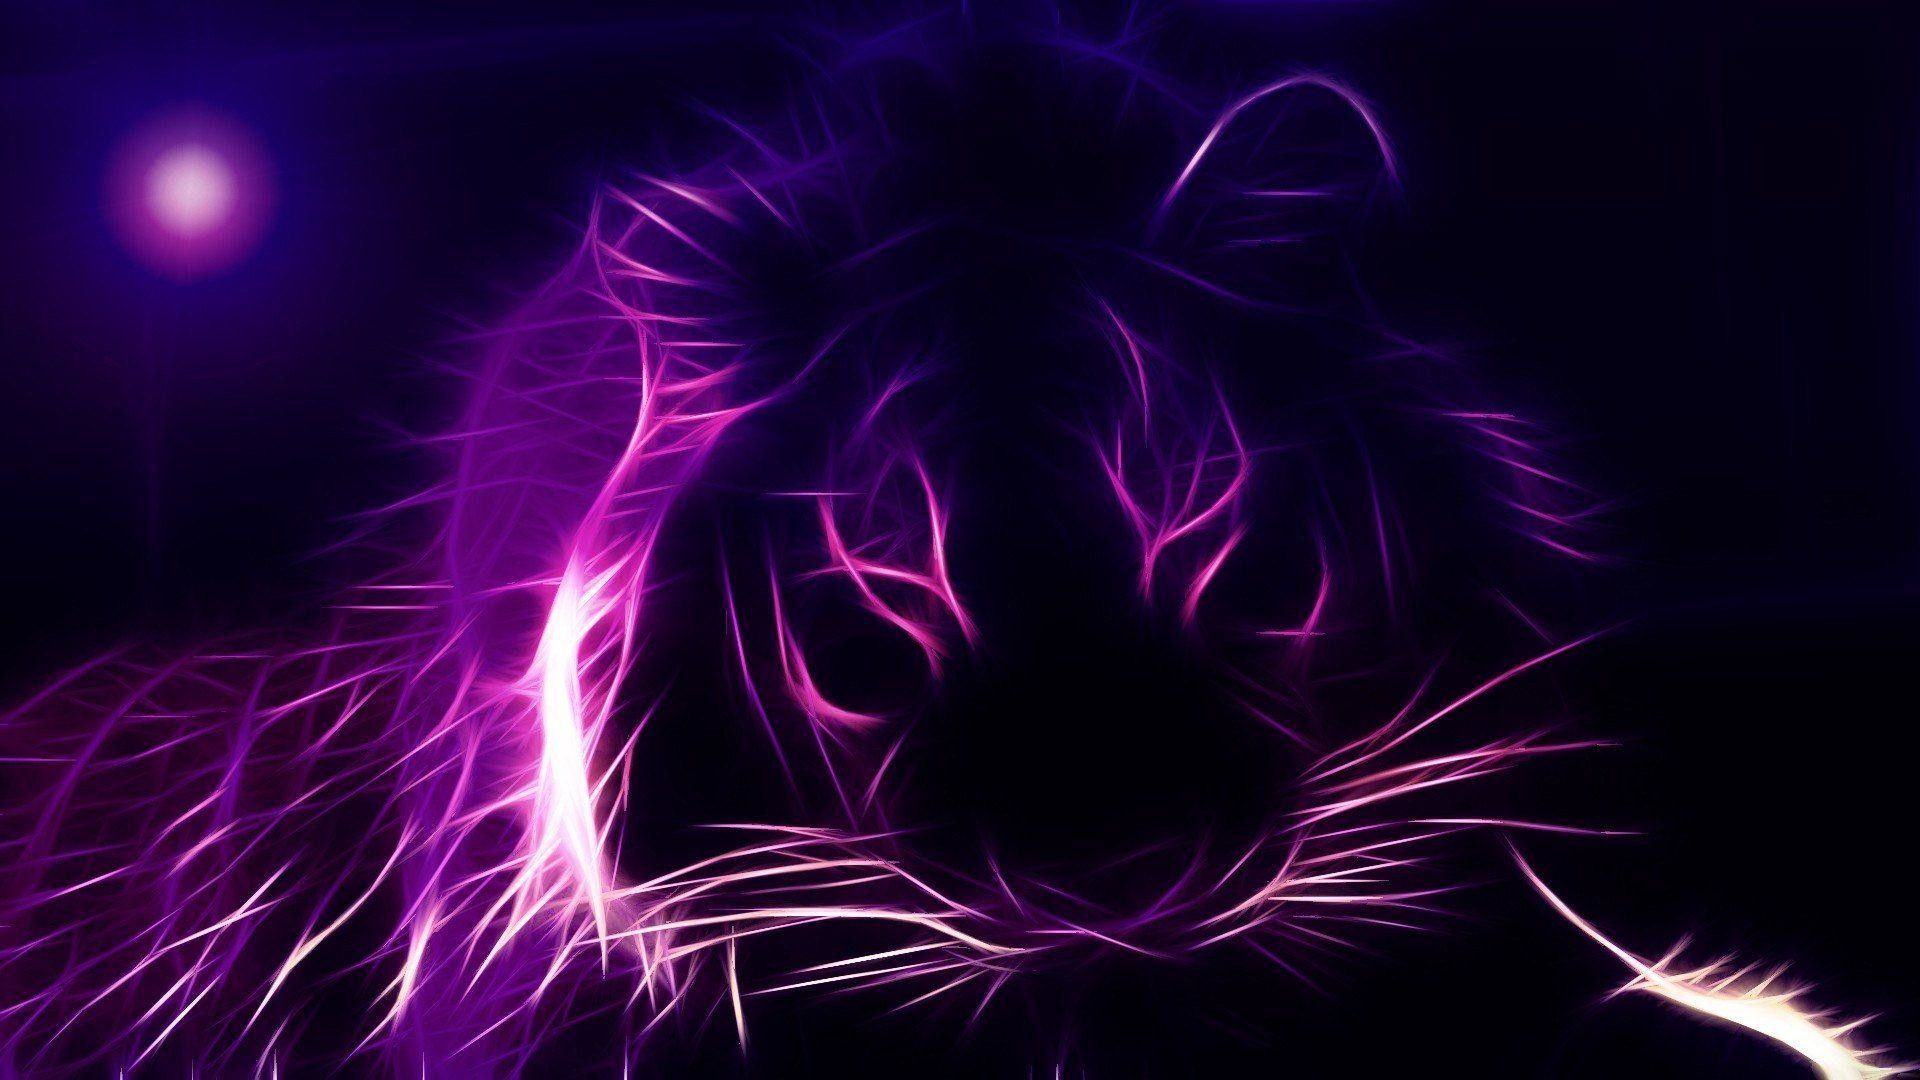 Purple neon tiger wallpaper for your phone, desktop or laptop. - Neon purple, gaming